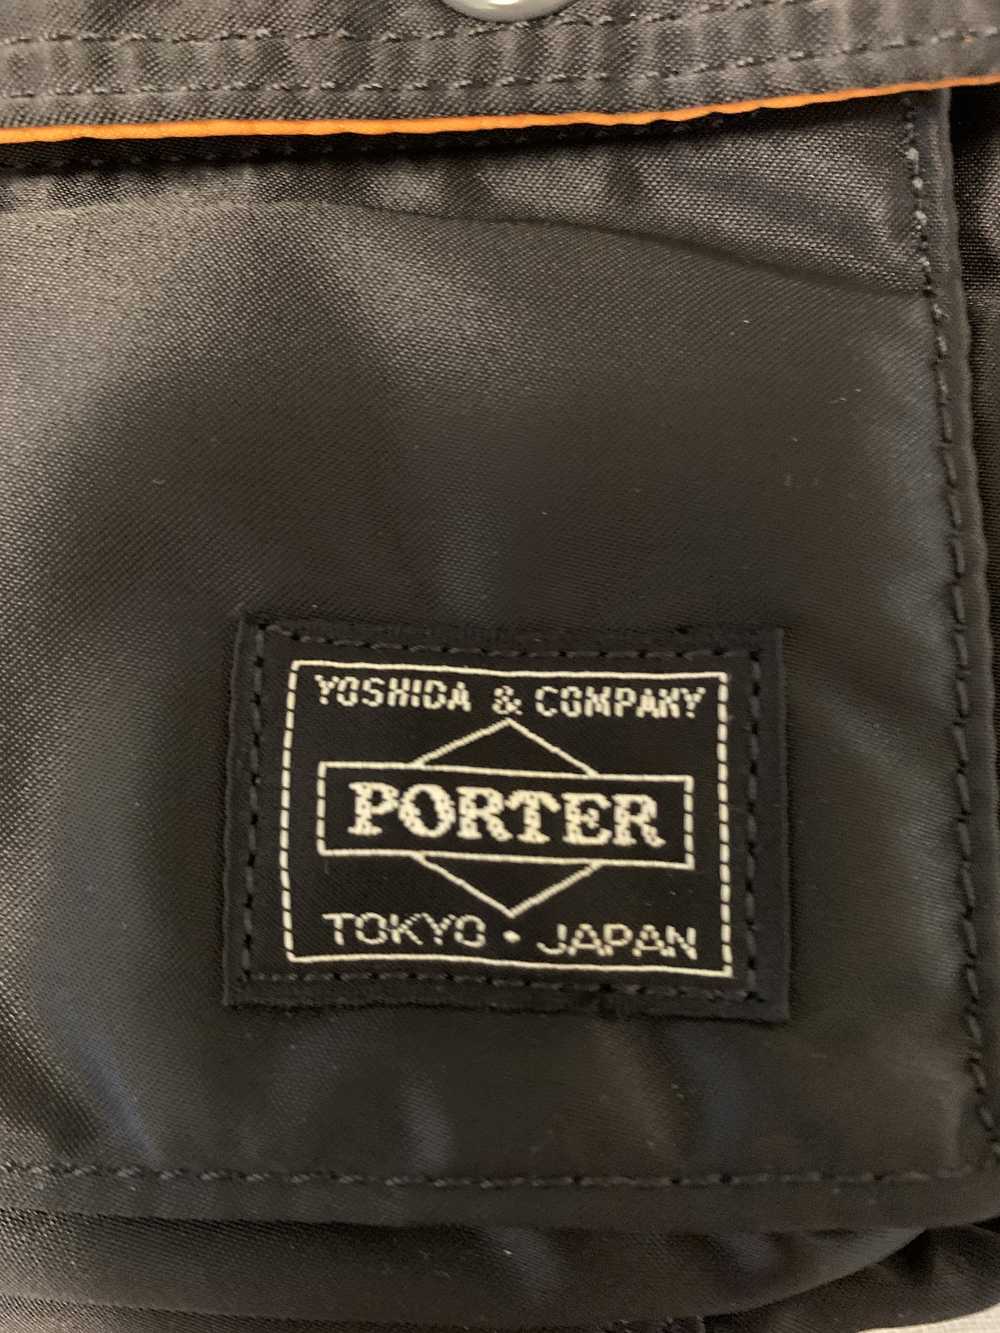 Porter Porter Waist Bag - image 3